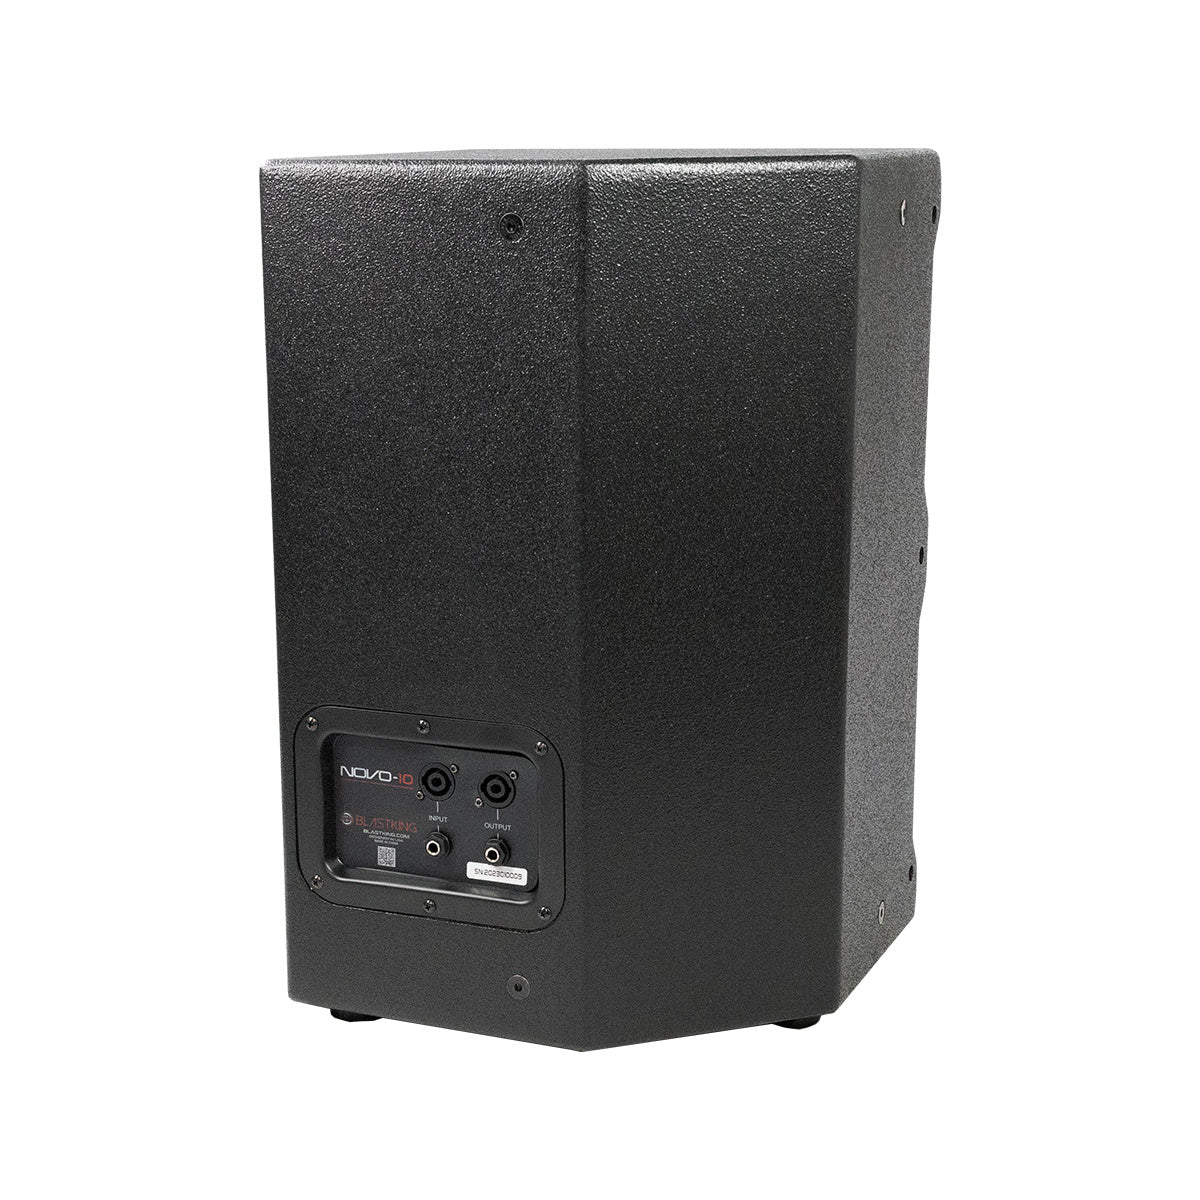 Blastking NOVO-10 10” 2-Way Passive Loudspeaker 800 Watts